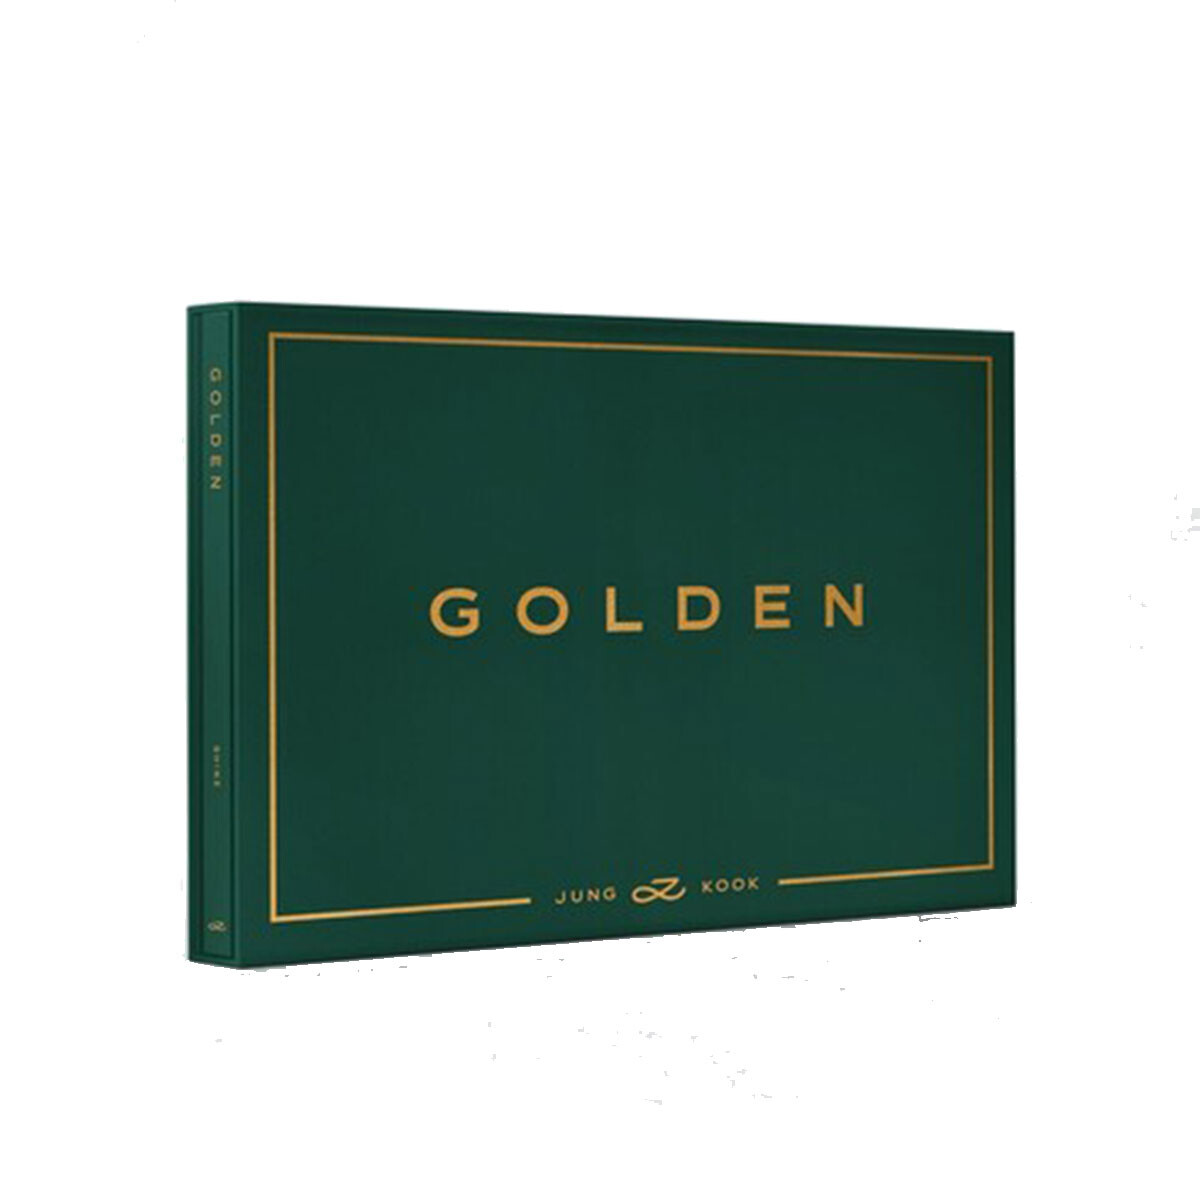 Jung Kook (bts) / Golden (shine) - Cd 